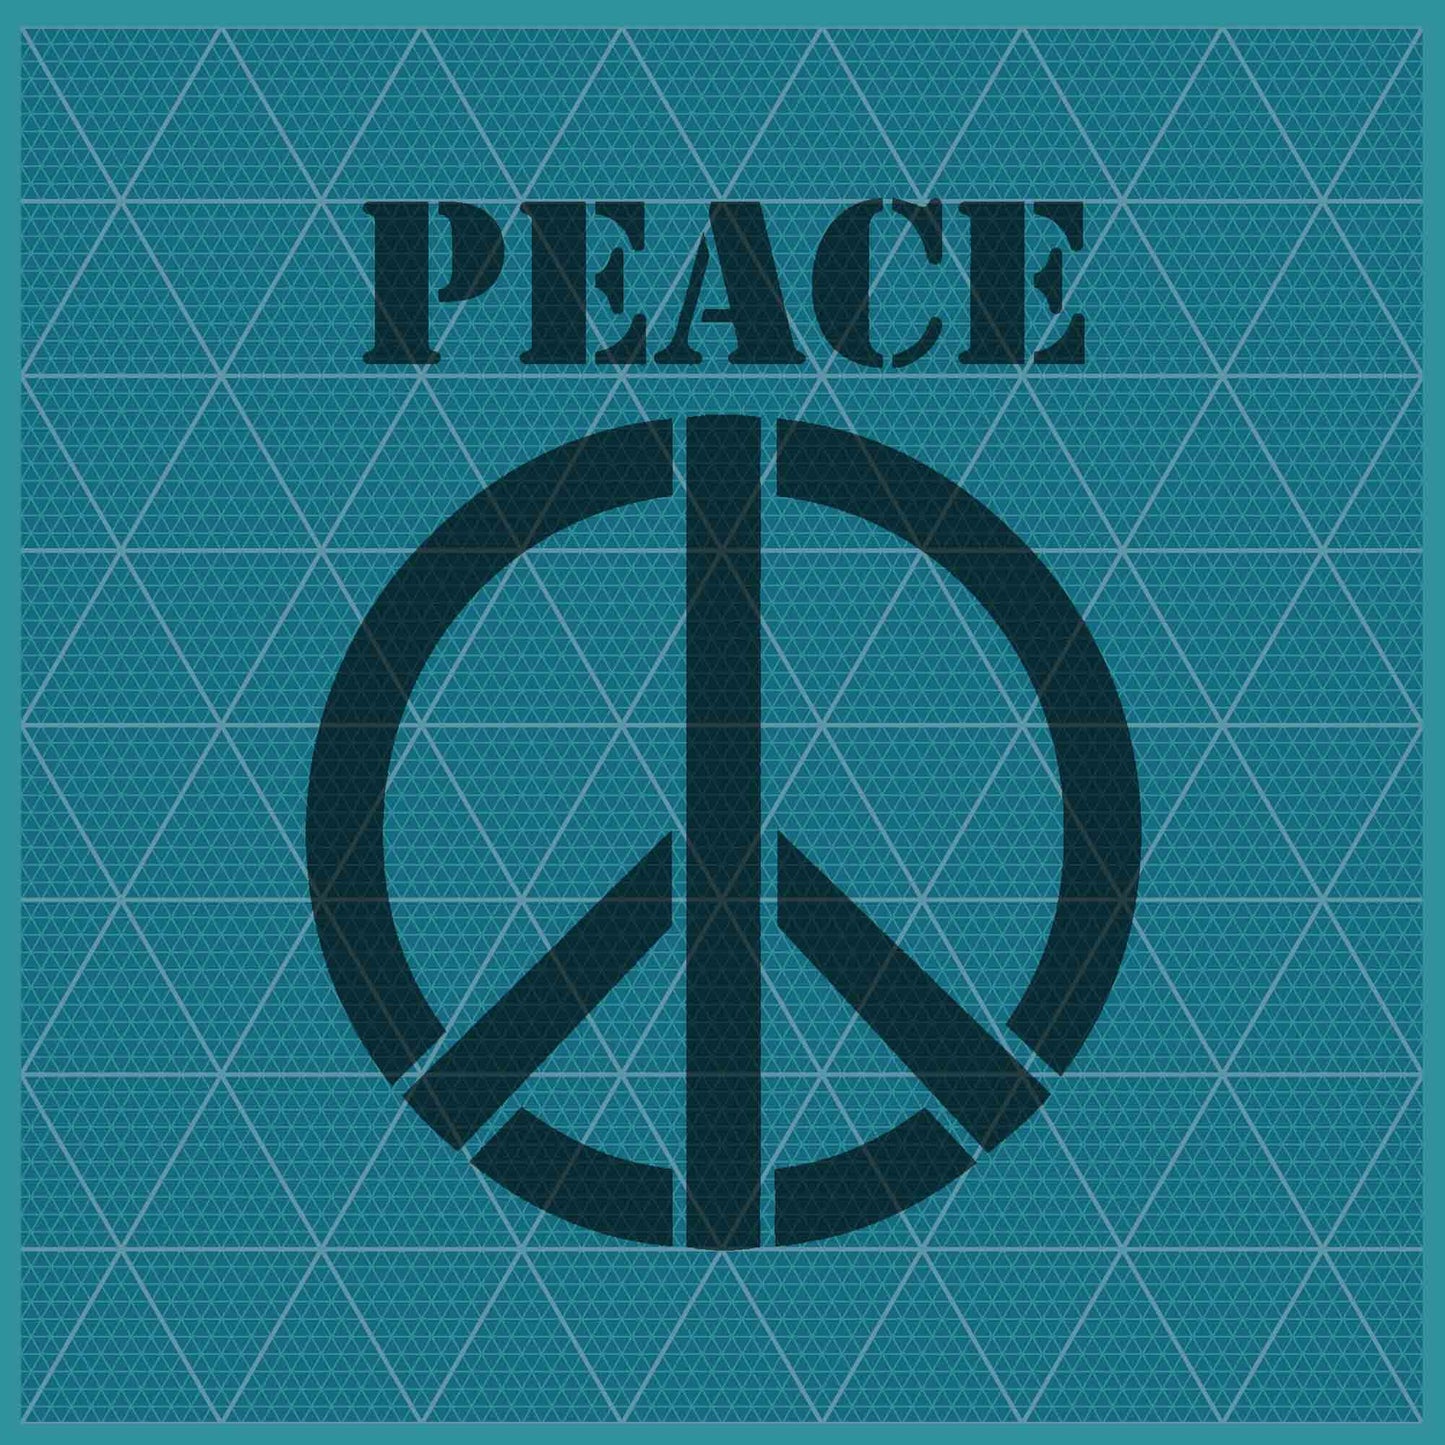 PEACE STENCIL - Lazy Stencils